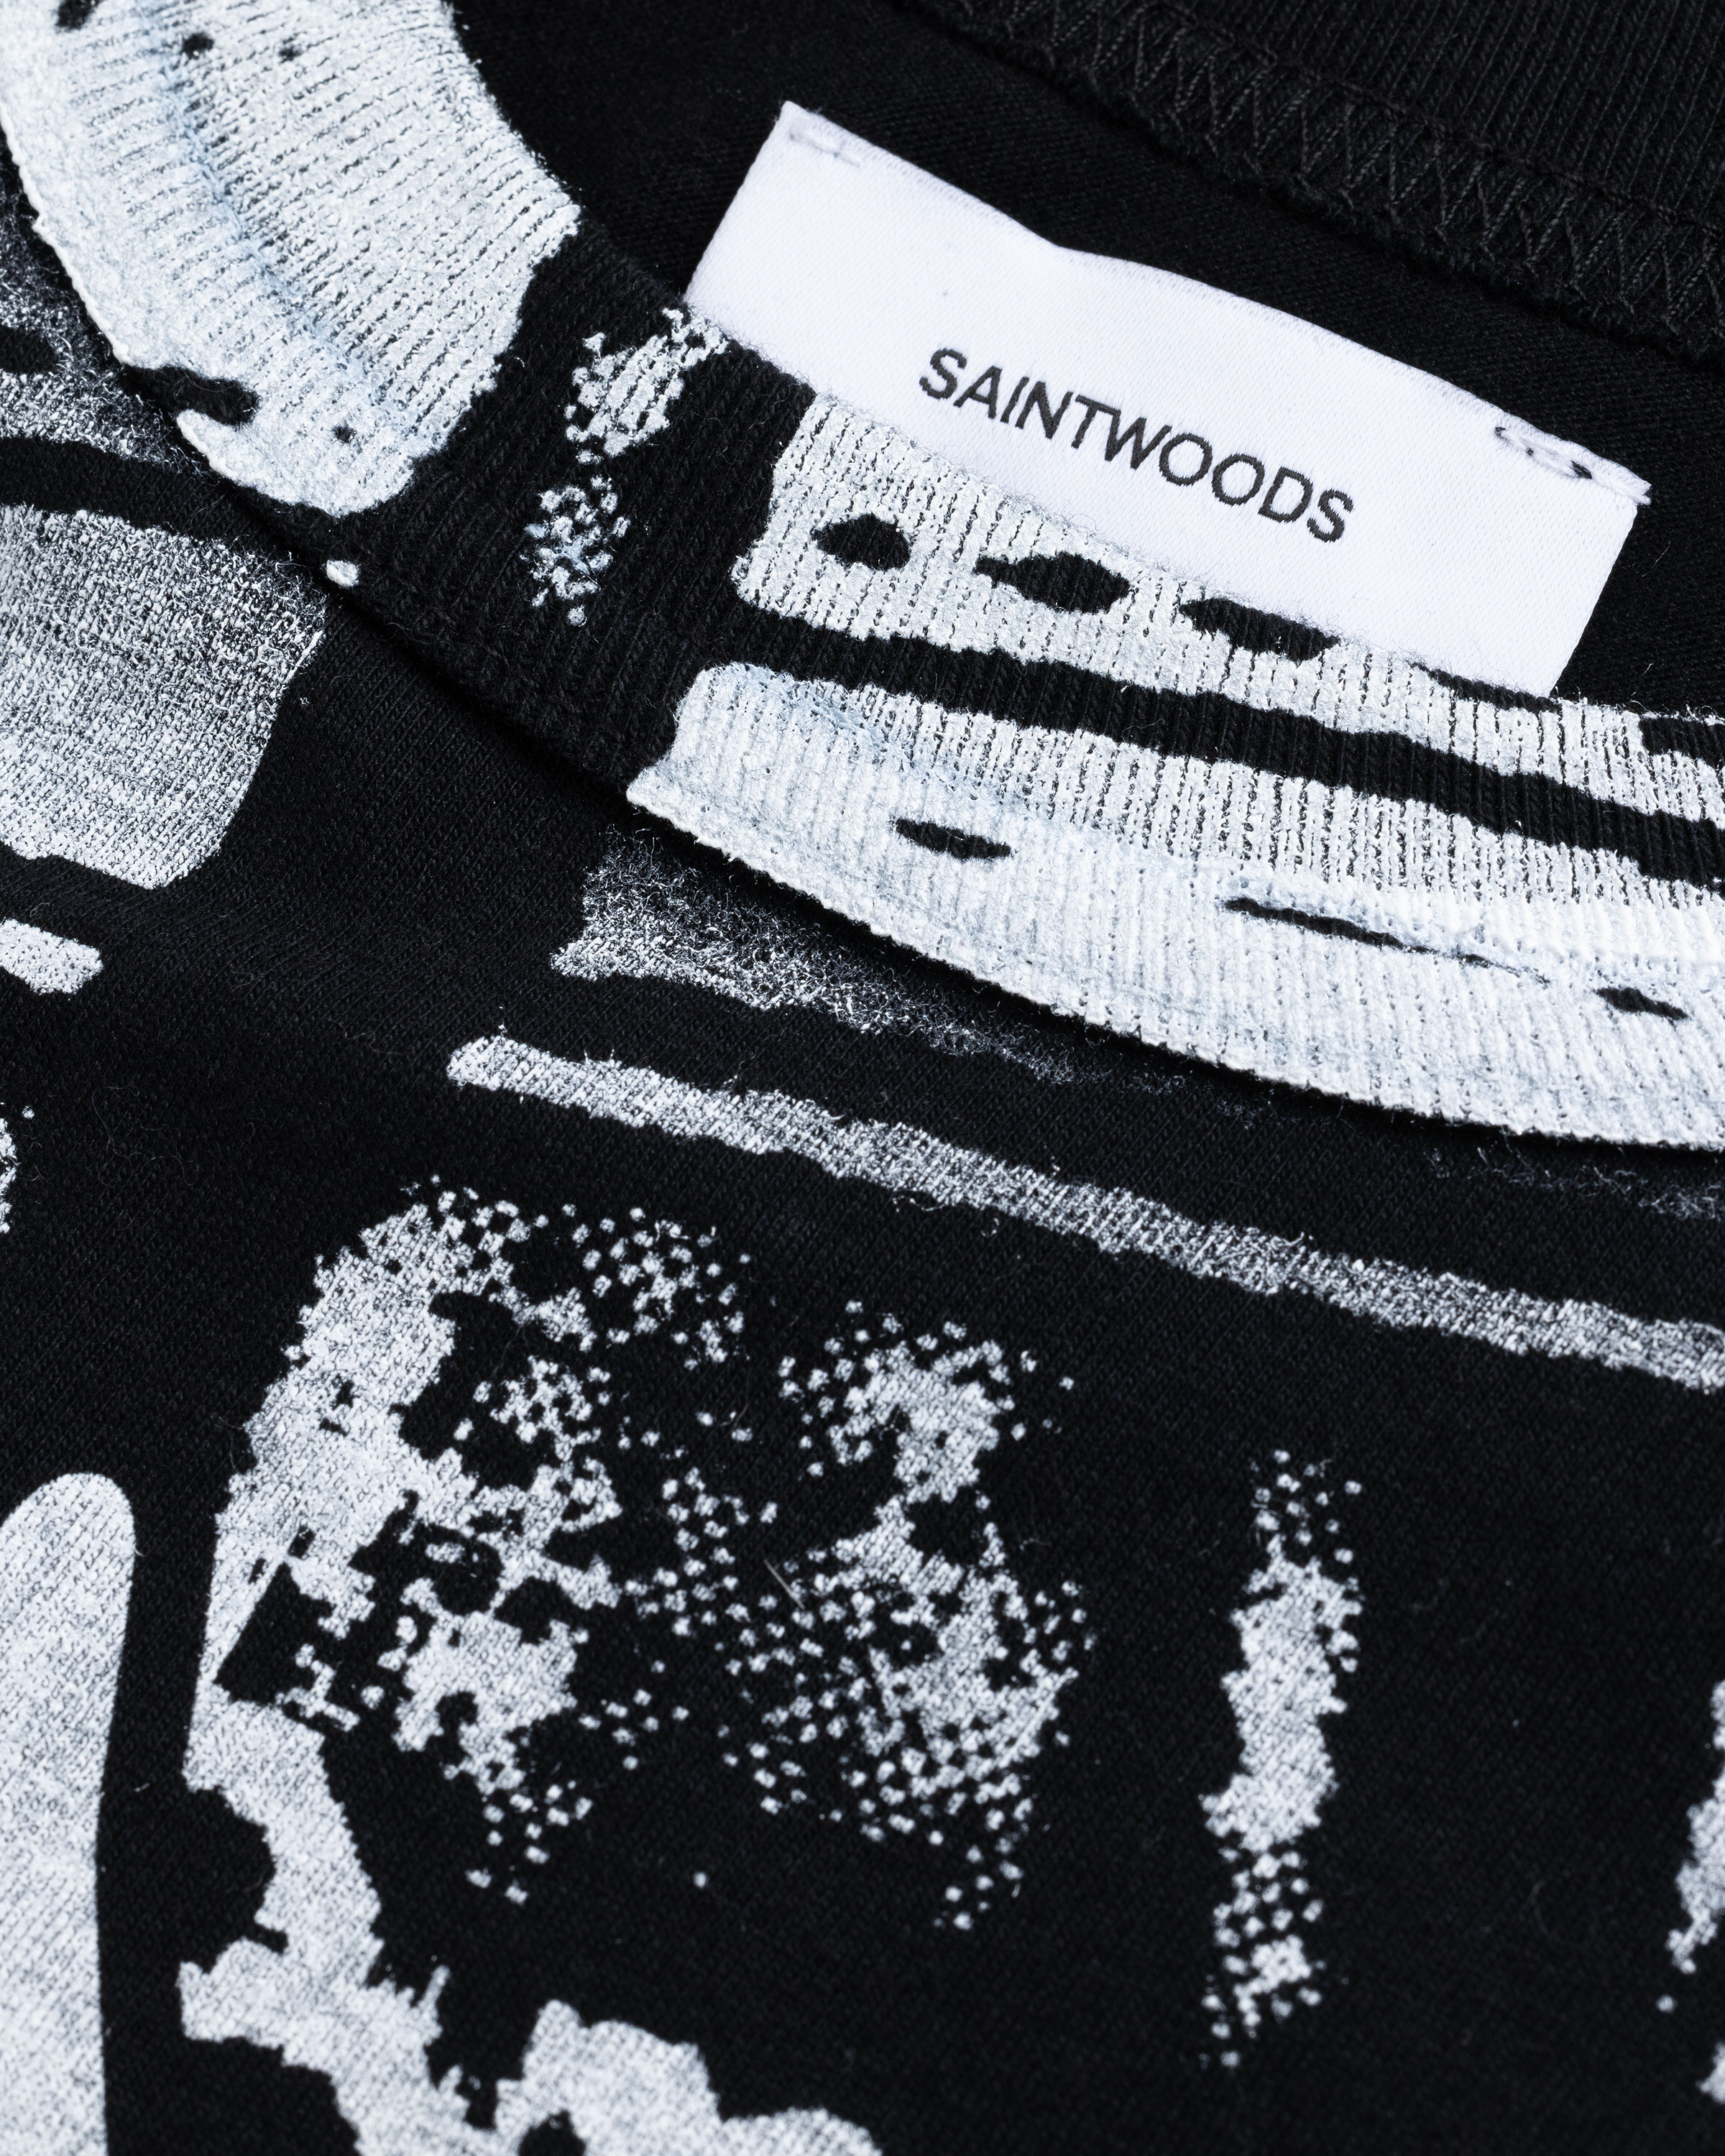 Saintwoods - S Angel Tee Black - Clothing - Black - Image 6